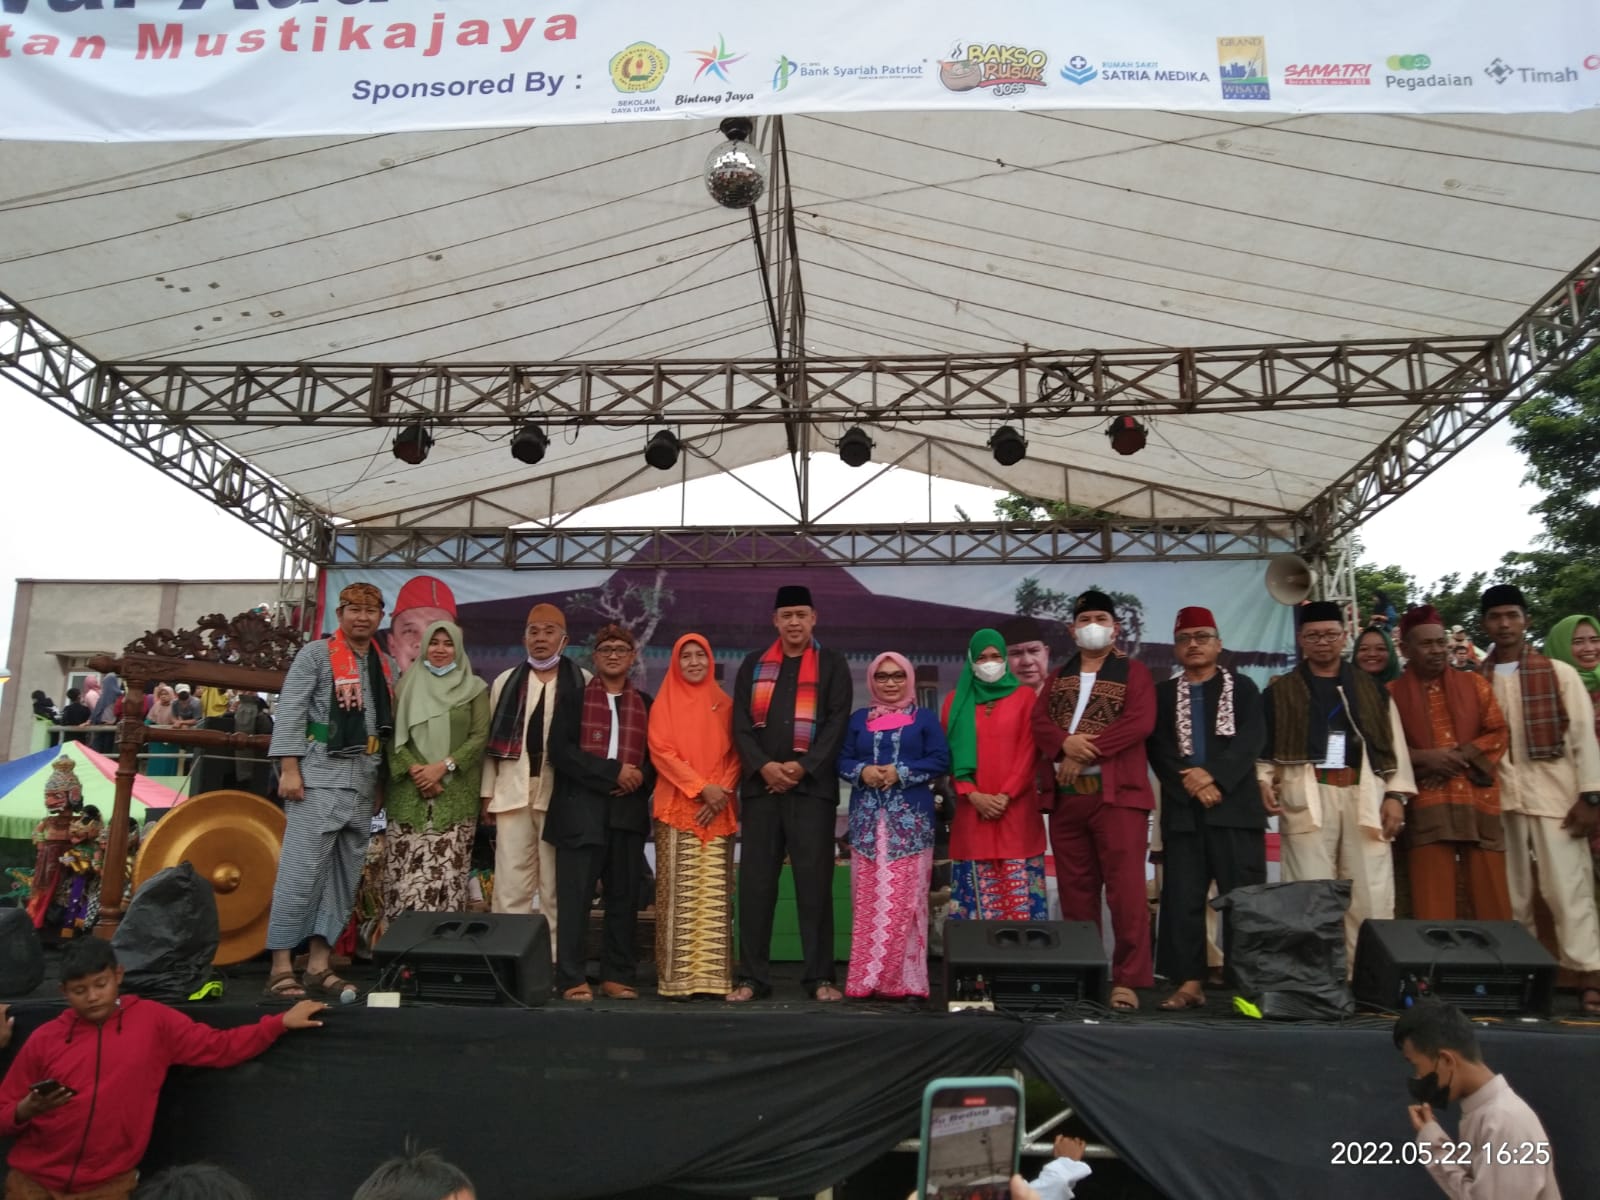 Mustikajaya Kembali Gelar Festival Adu Bedug dan Dondang